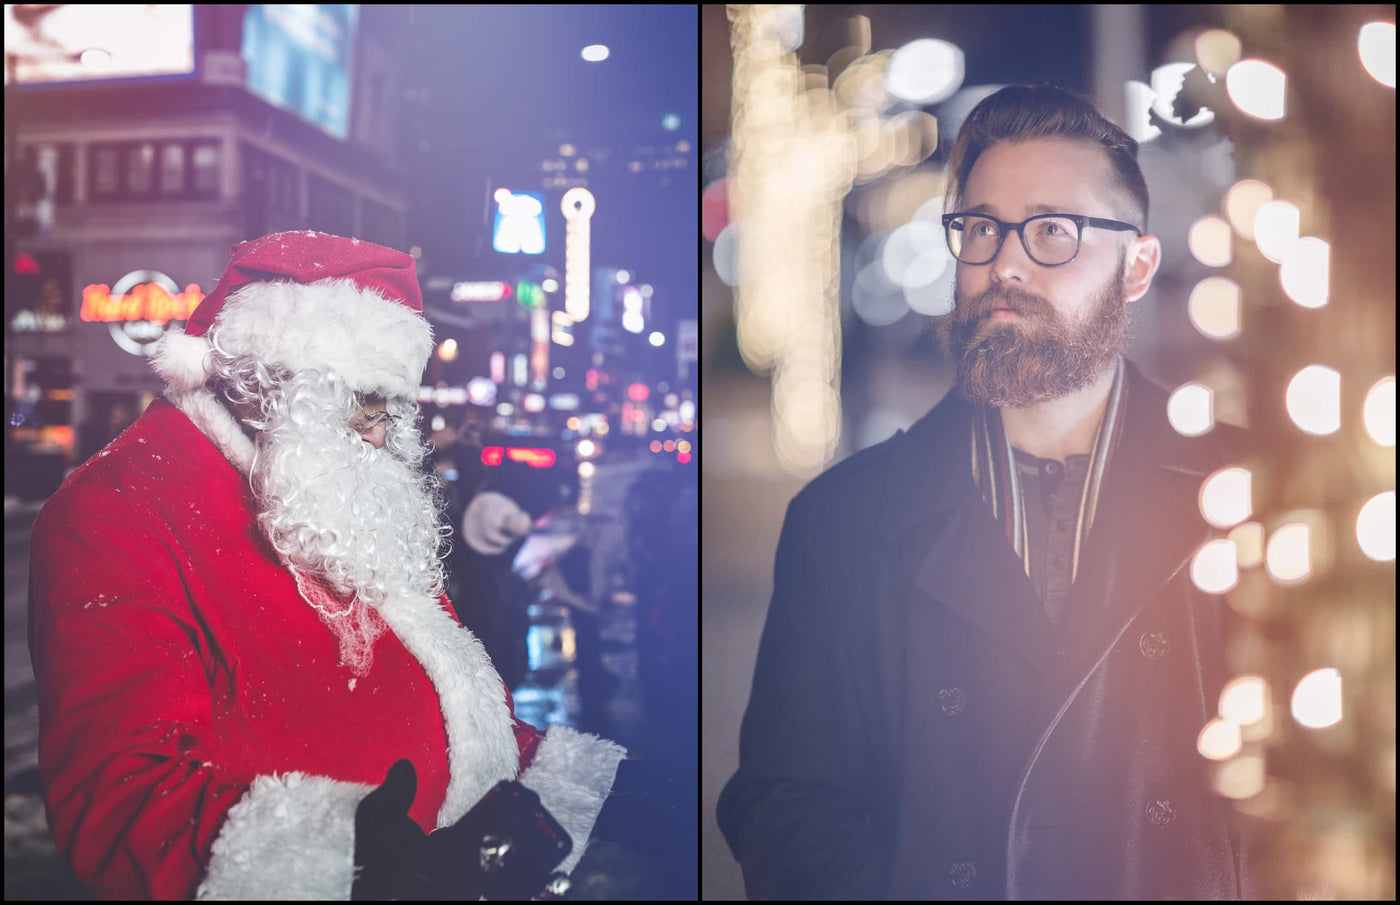 2500+ Christmas & Winter Effects Bundle - Artixty